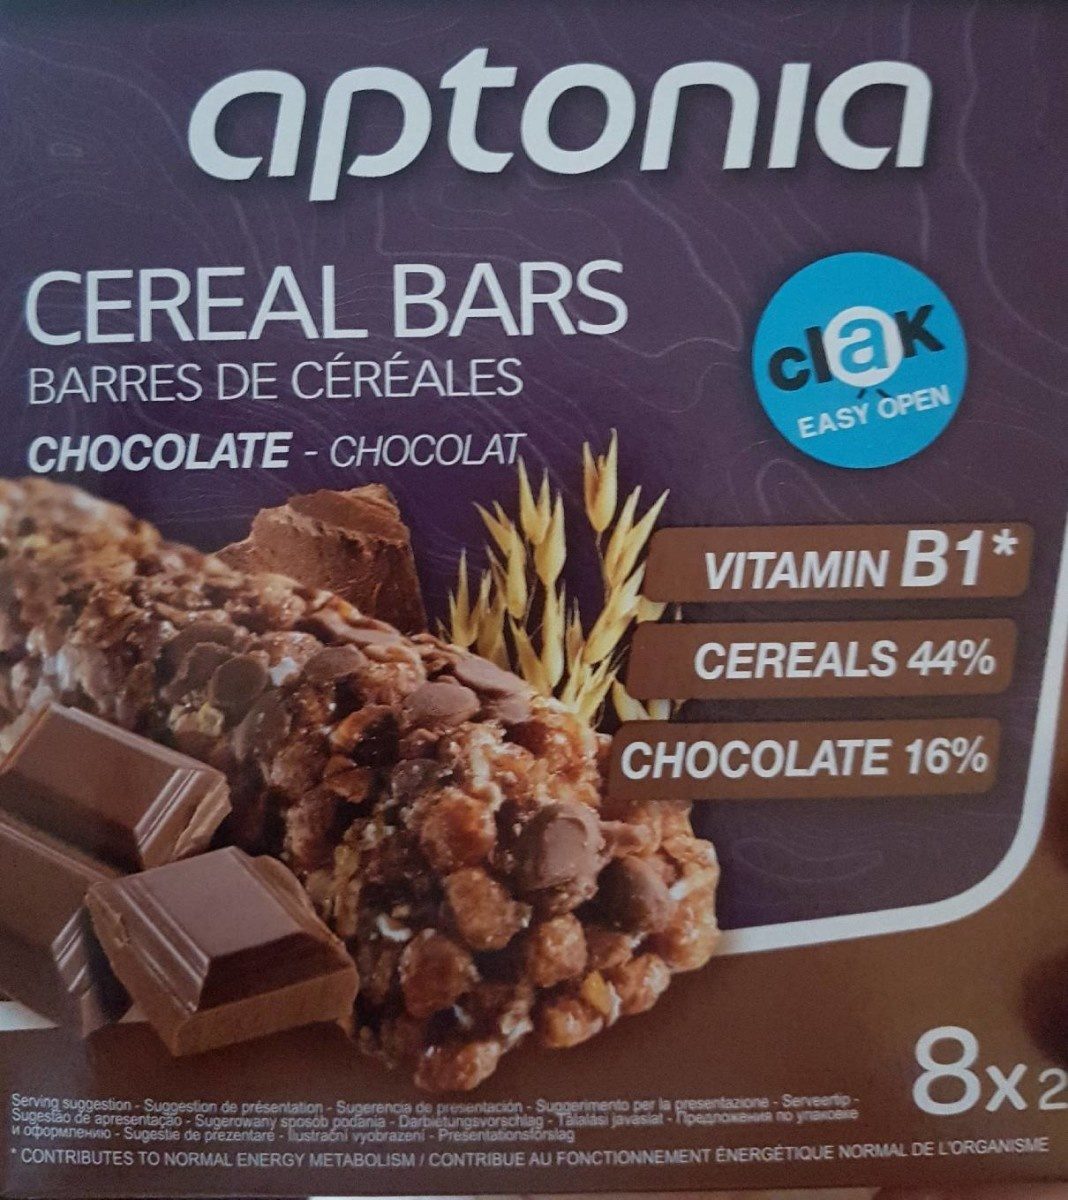 Cereal Bars Chocolate - Aptonia